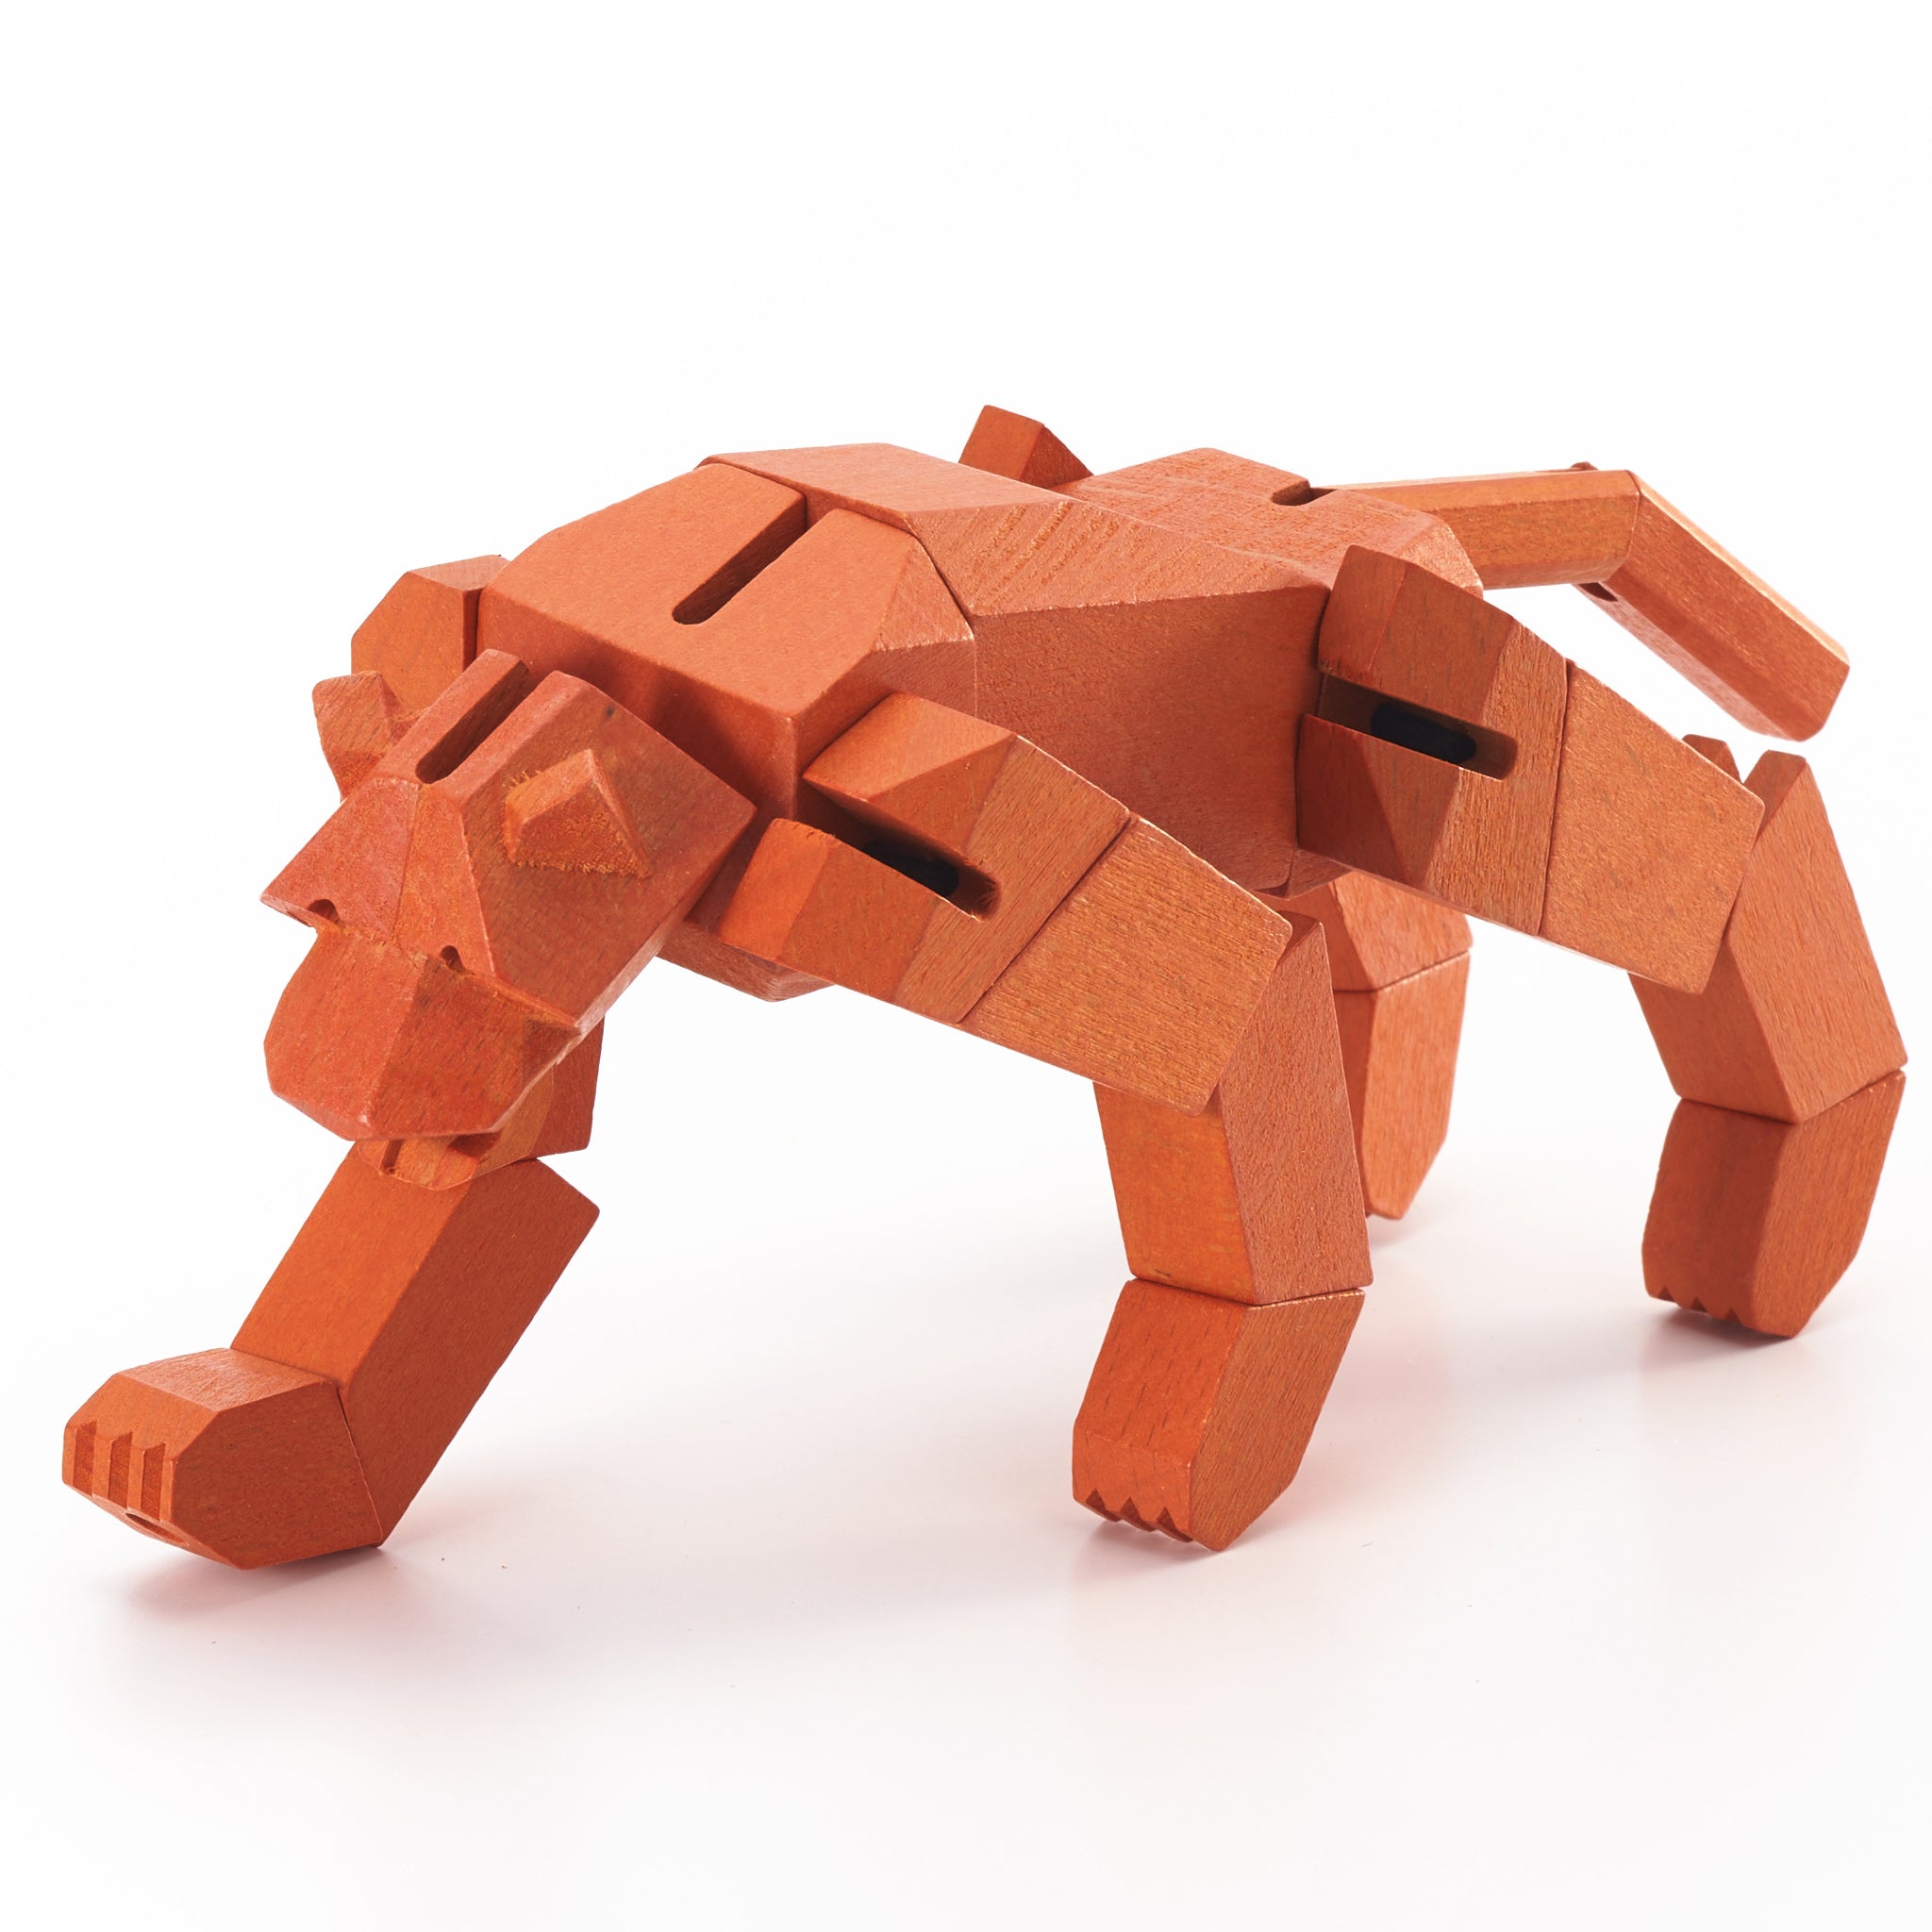 Morphits ® Tiger Wooden Toy Playset Puzzle Orange Walk